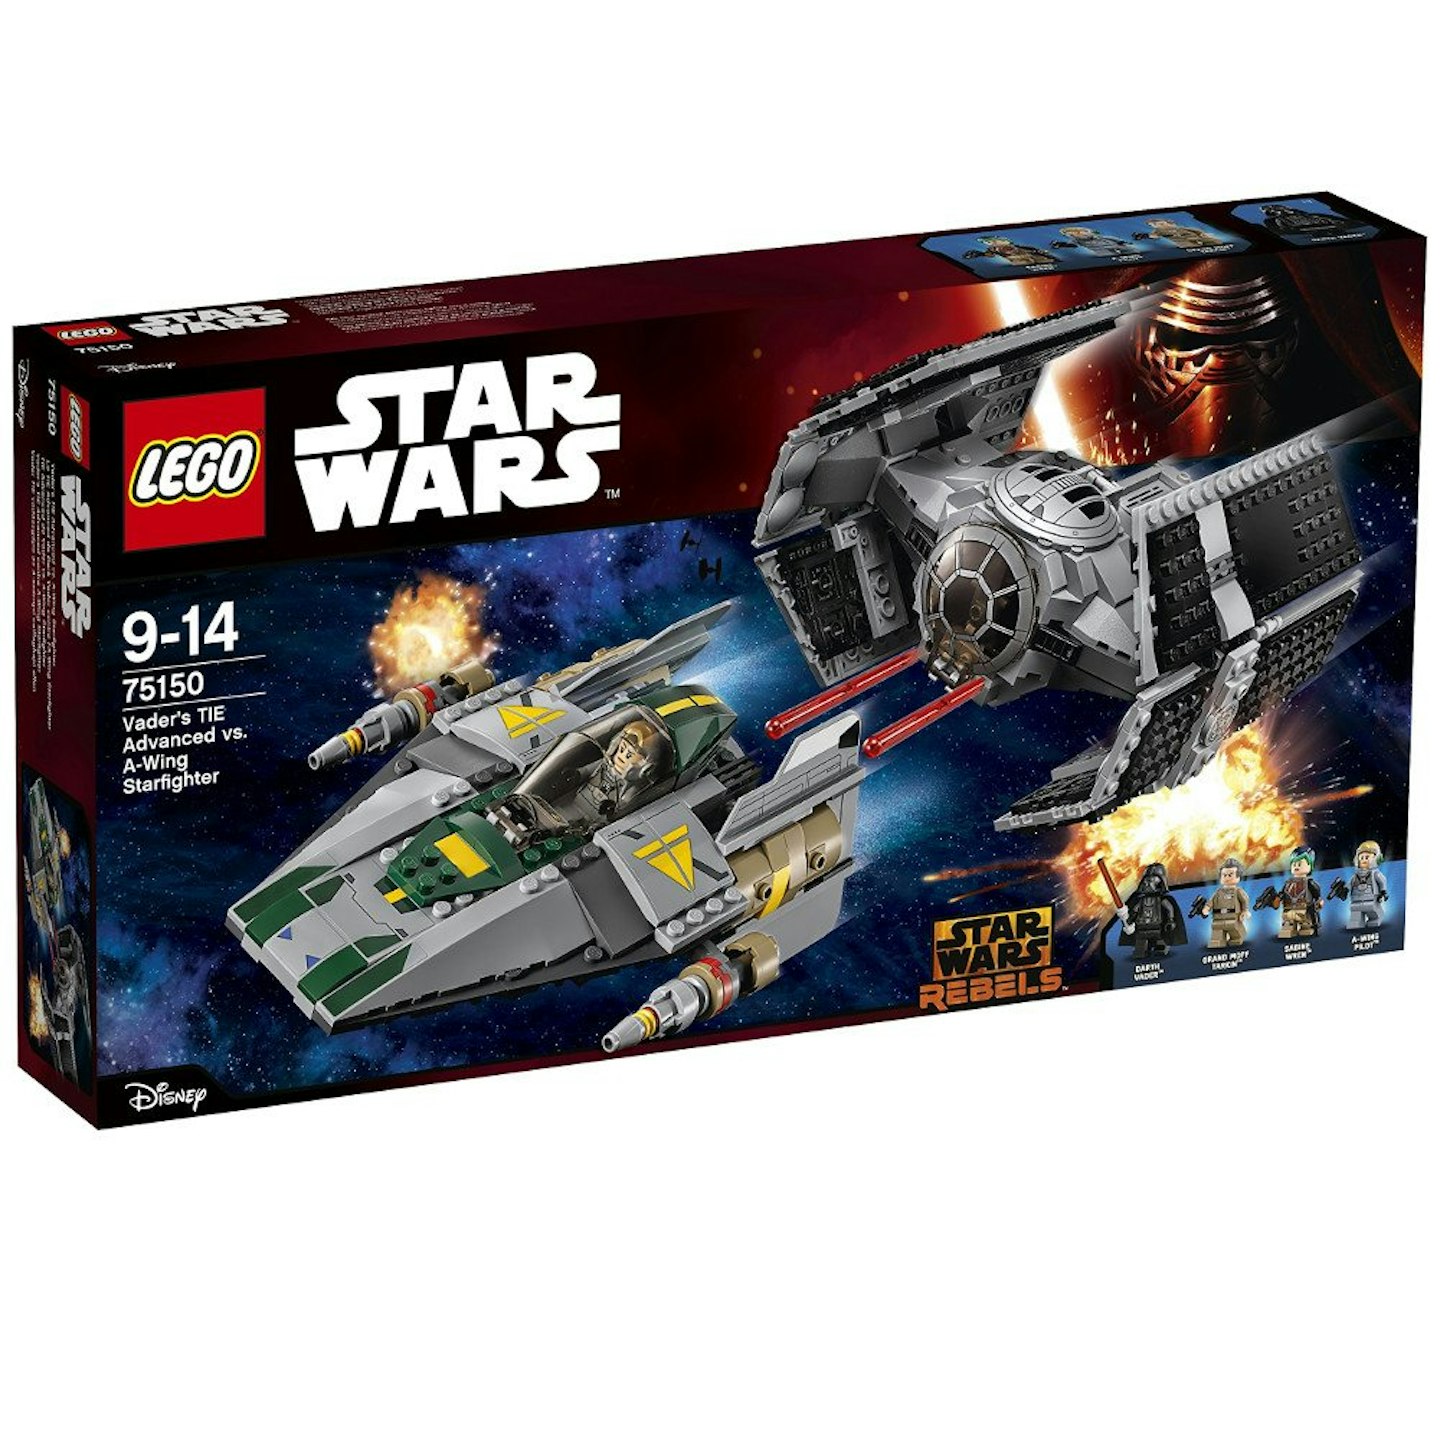 LEGO Star Wars Vader's TIE Advanced Vs A-Wing Starfighter Construction Set